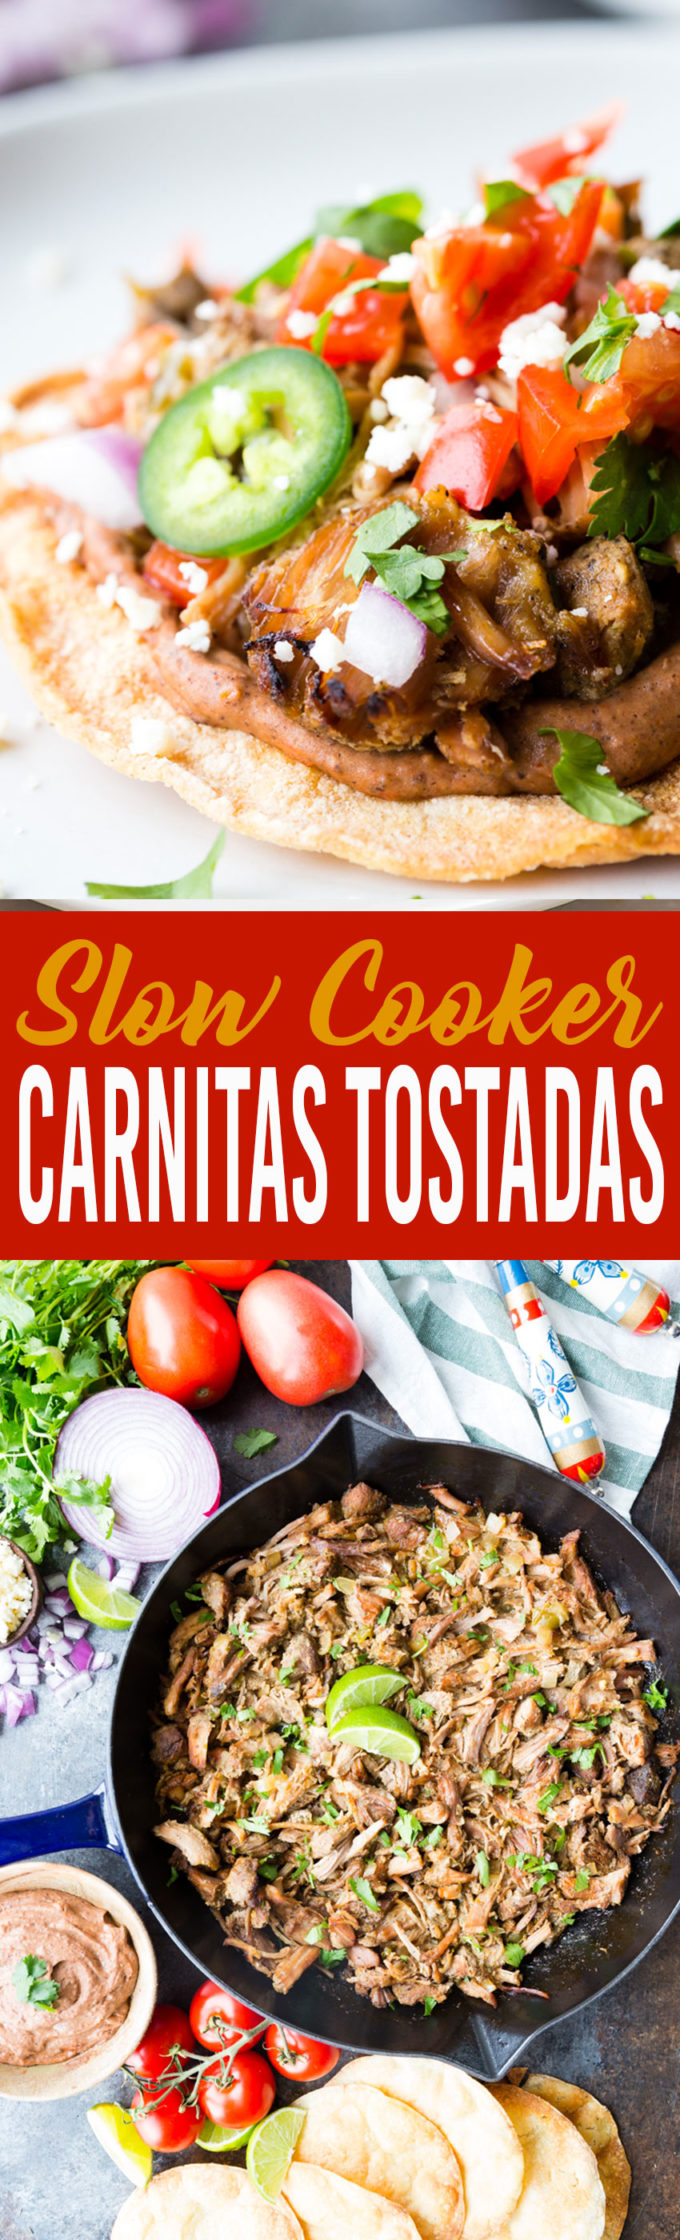 Slow Cooker Carnitas Tostadas have crispy delicious Smithfield Fresh Pork Carnitas, layered with delicious toppings